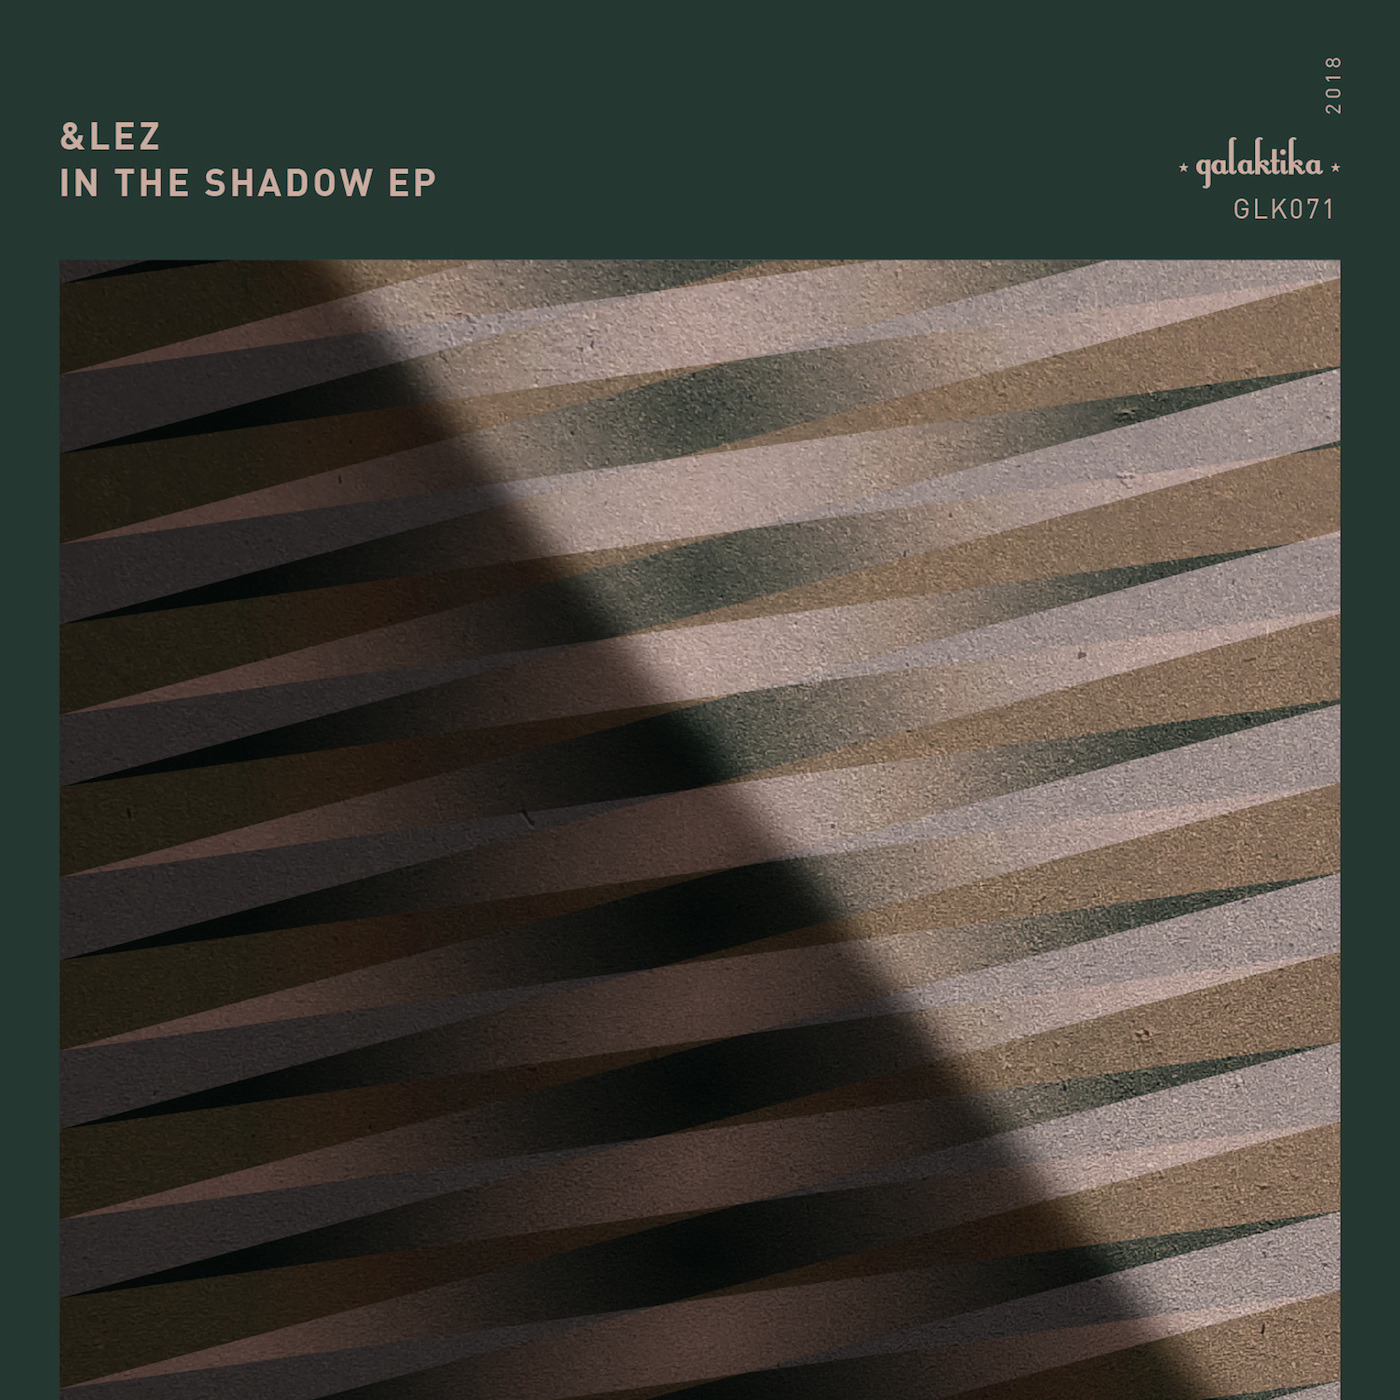 &lez - In The Shadow EP / Galaktika Records